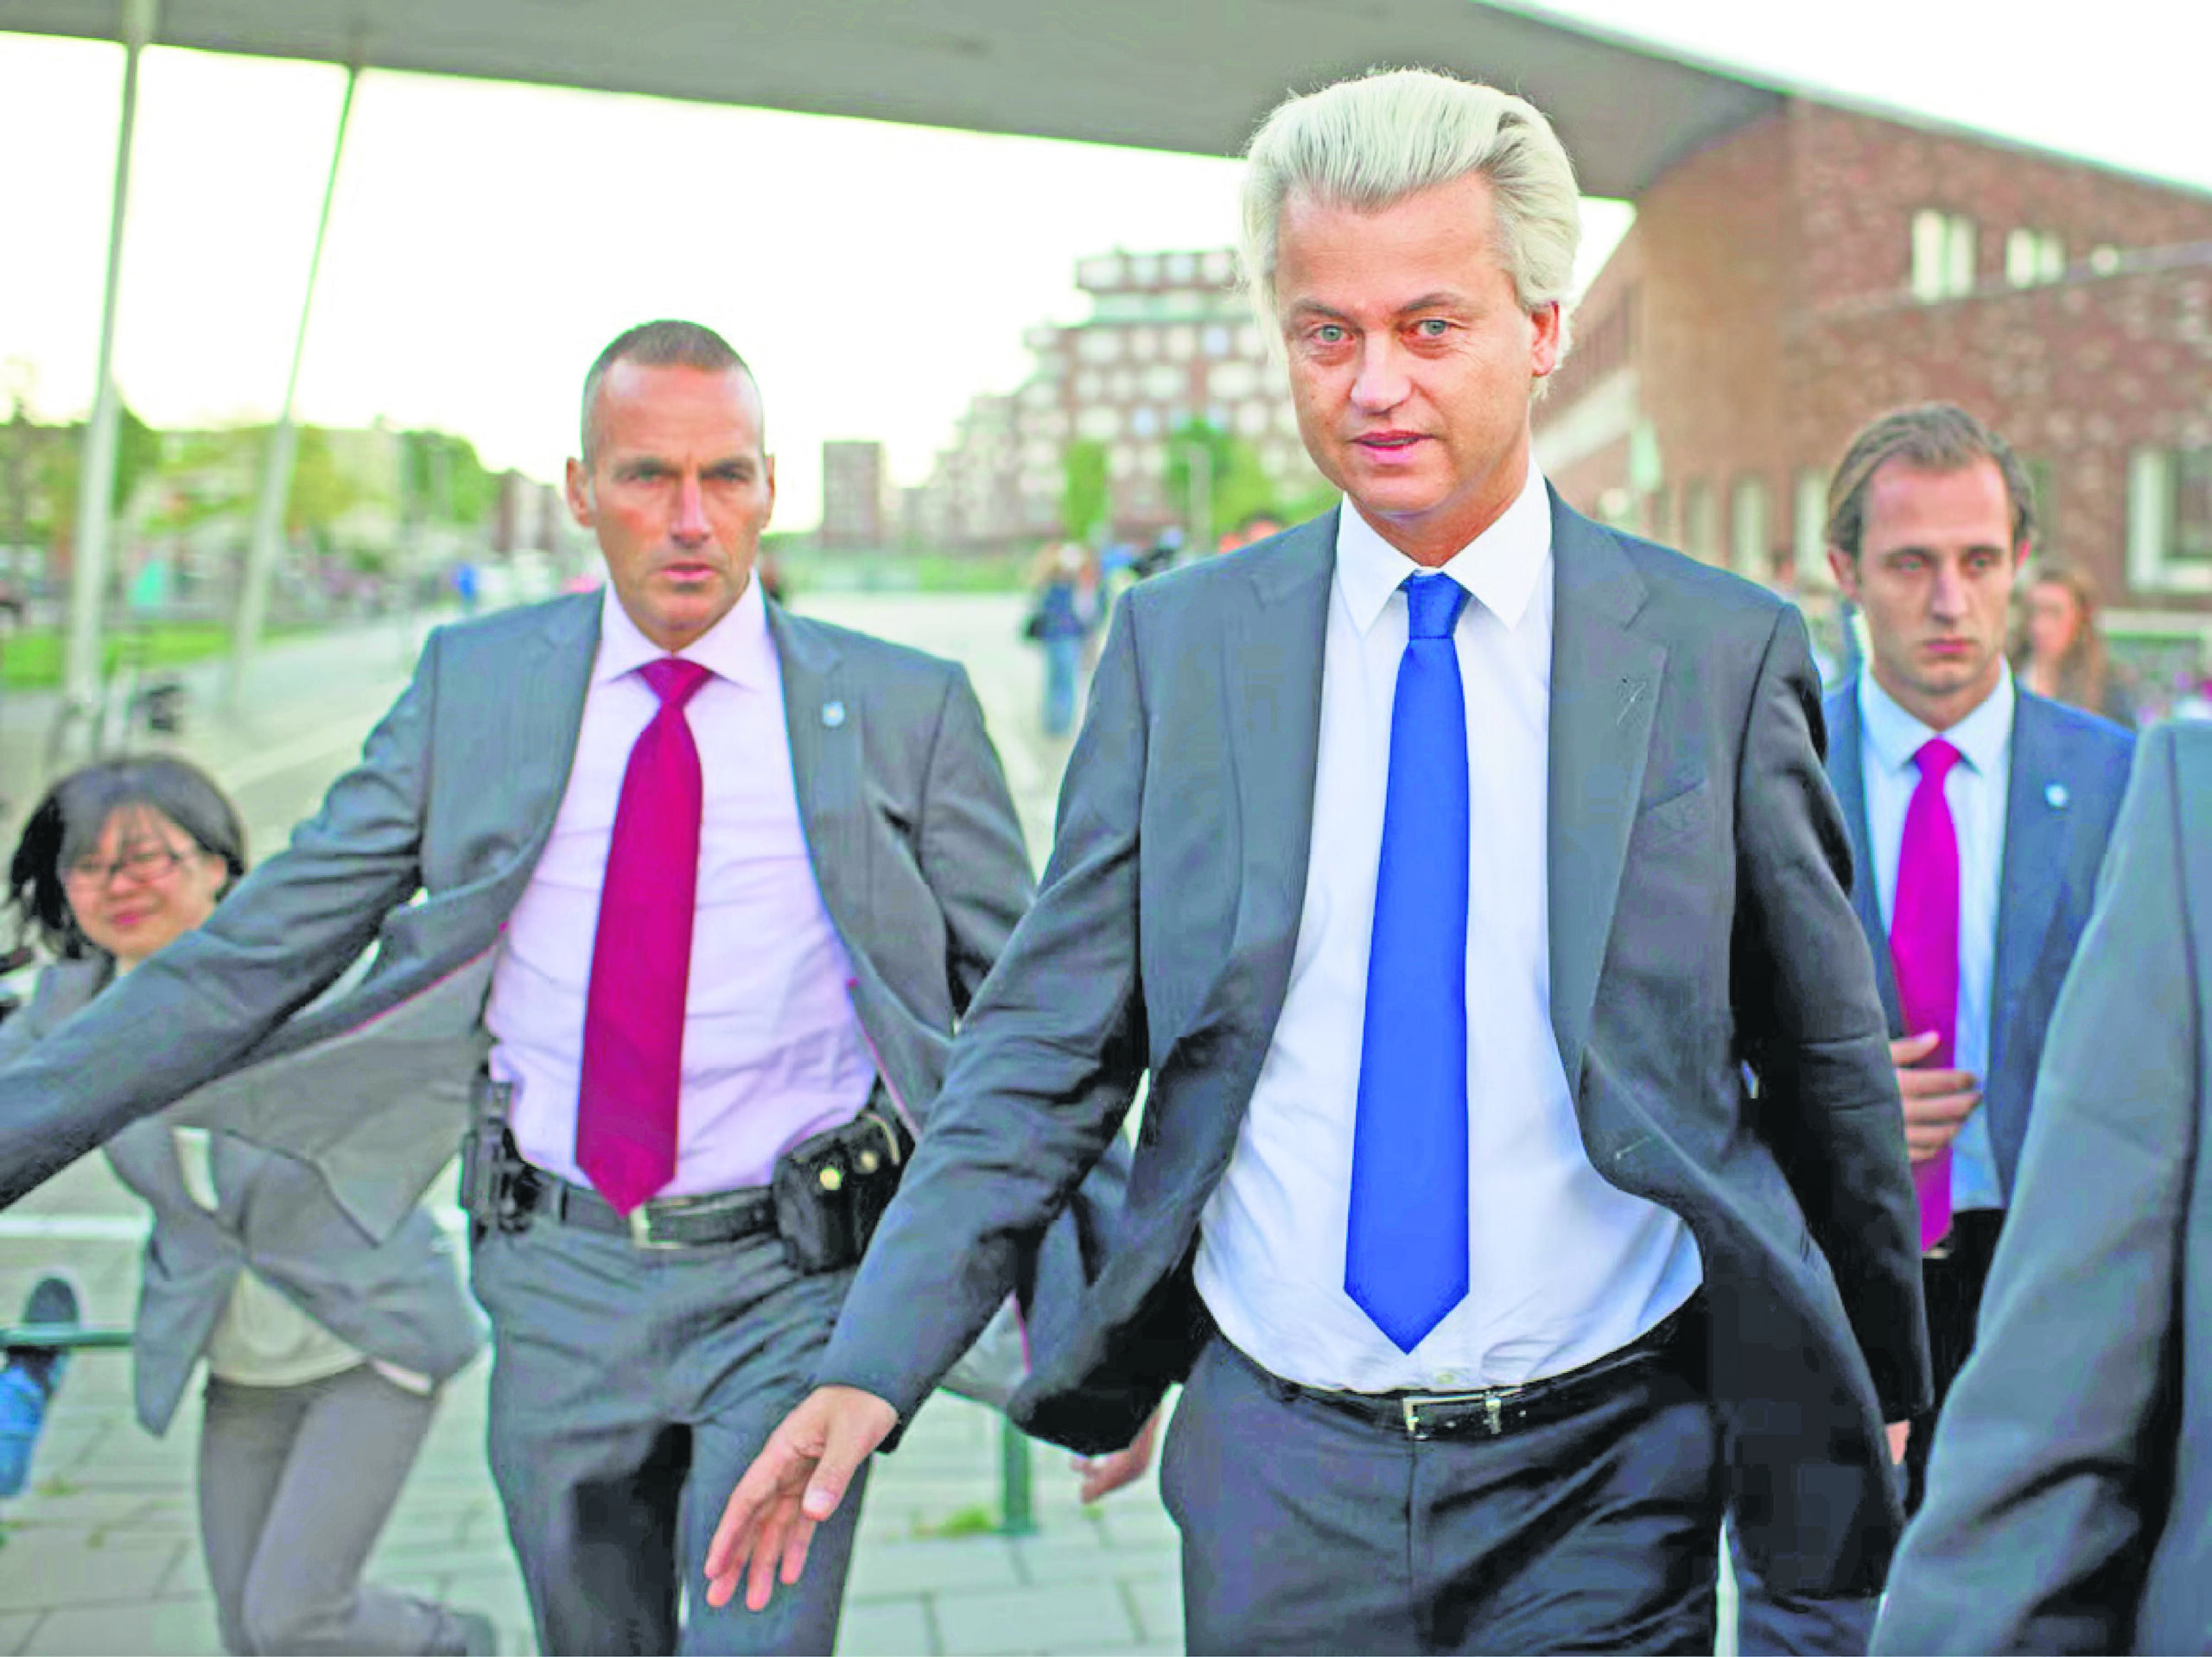 Anti-Islam populist Geert Wilders wins election in Netherlands